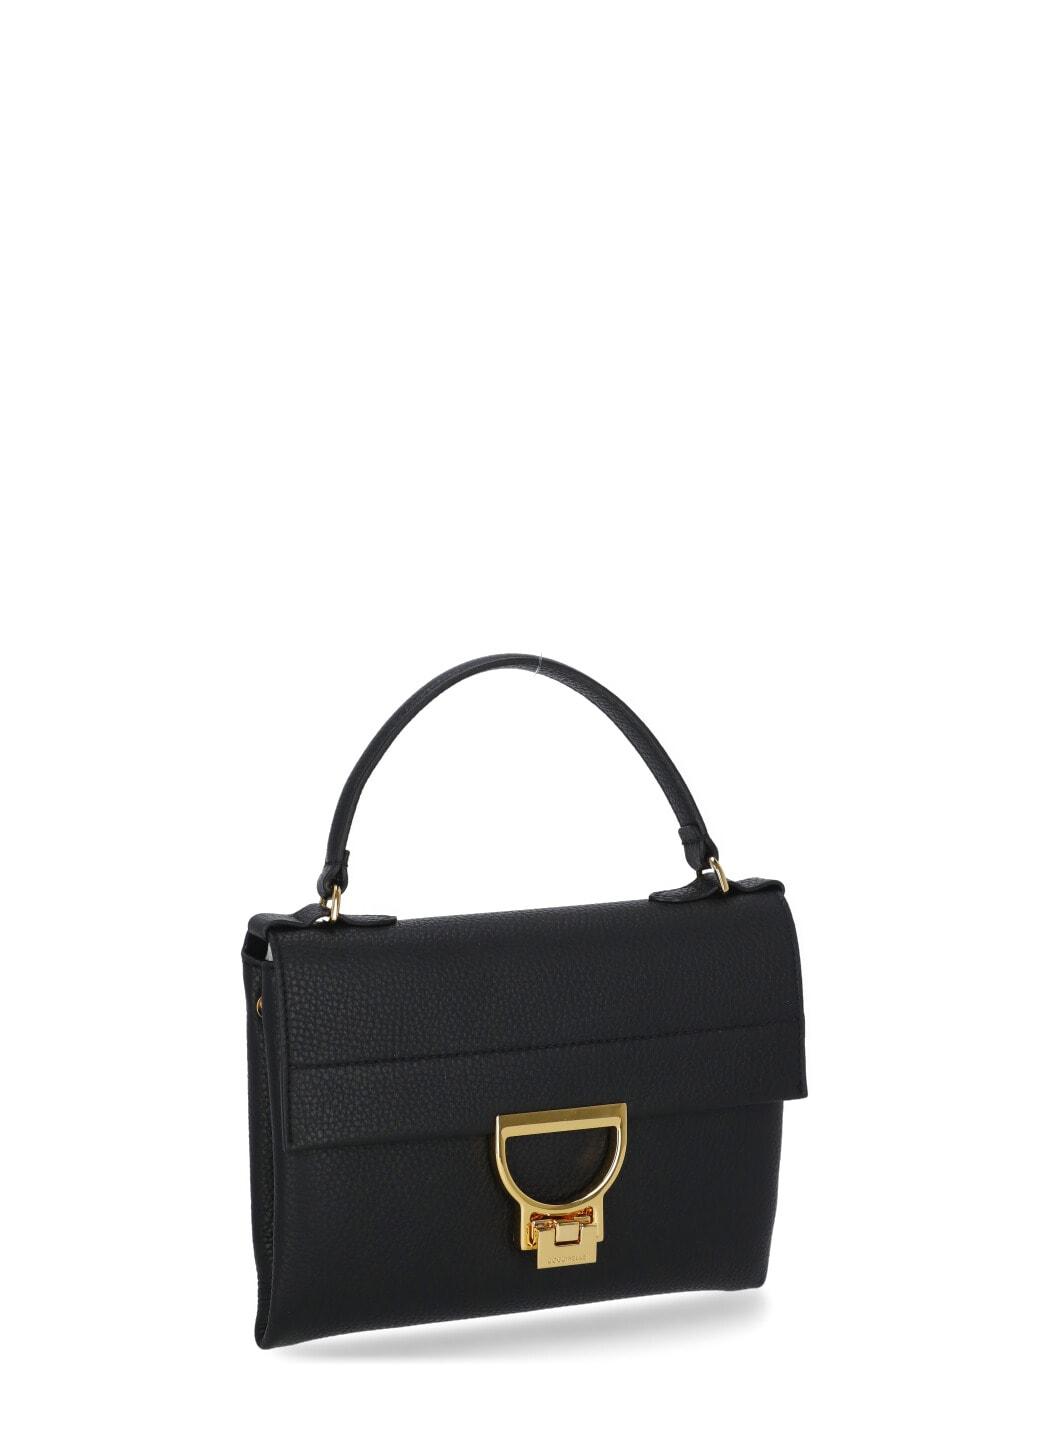 Coccinelle Arlettis Hand Bag in Black | Lyst